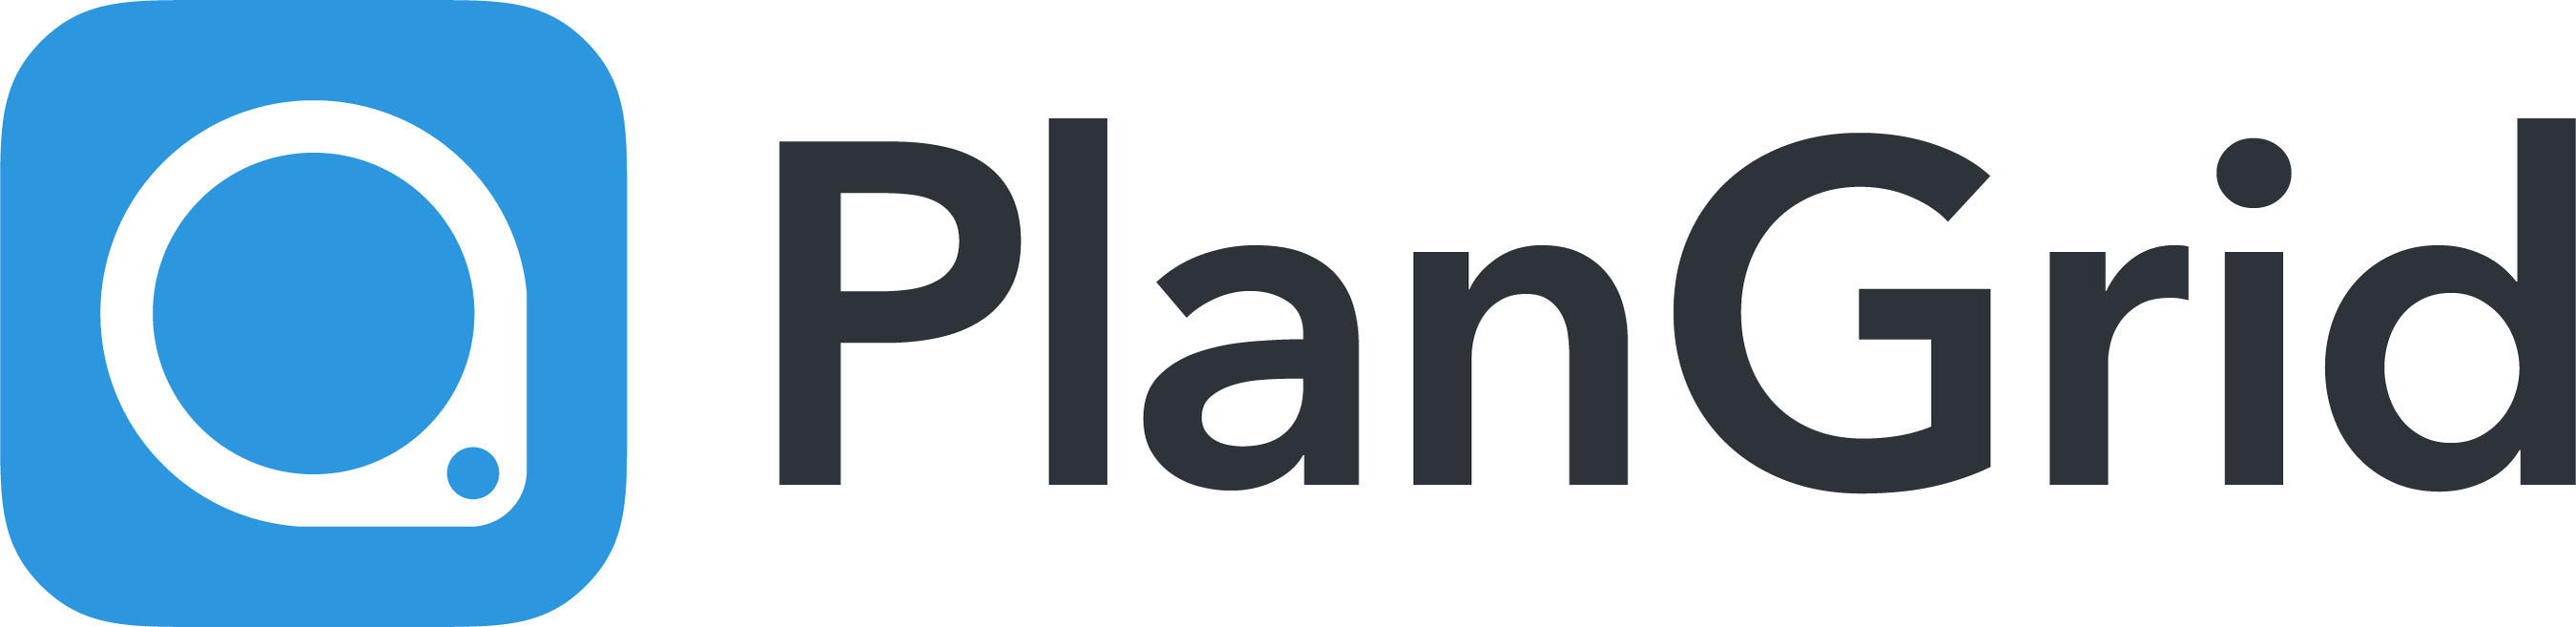 PlanGrid logo.